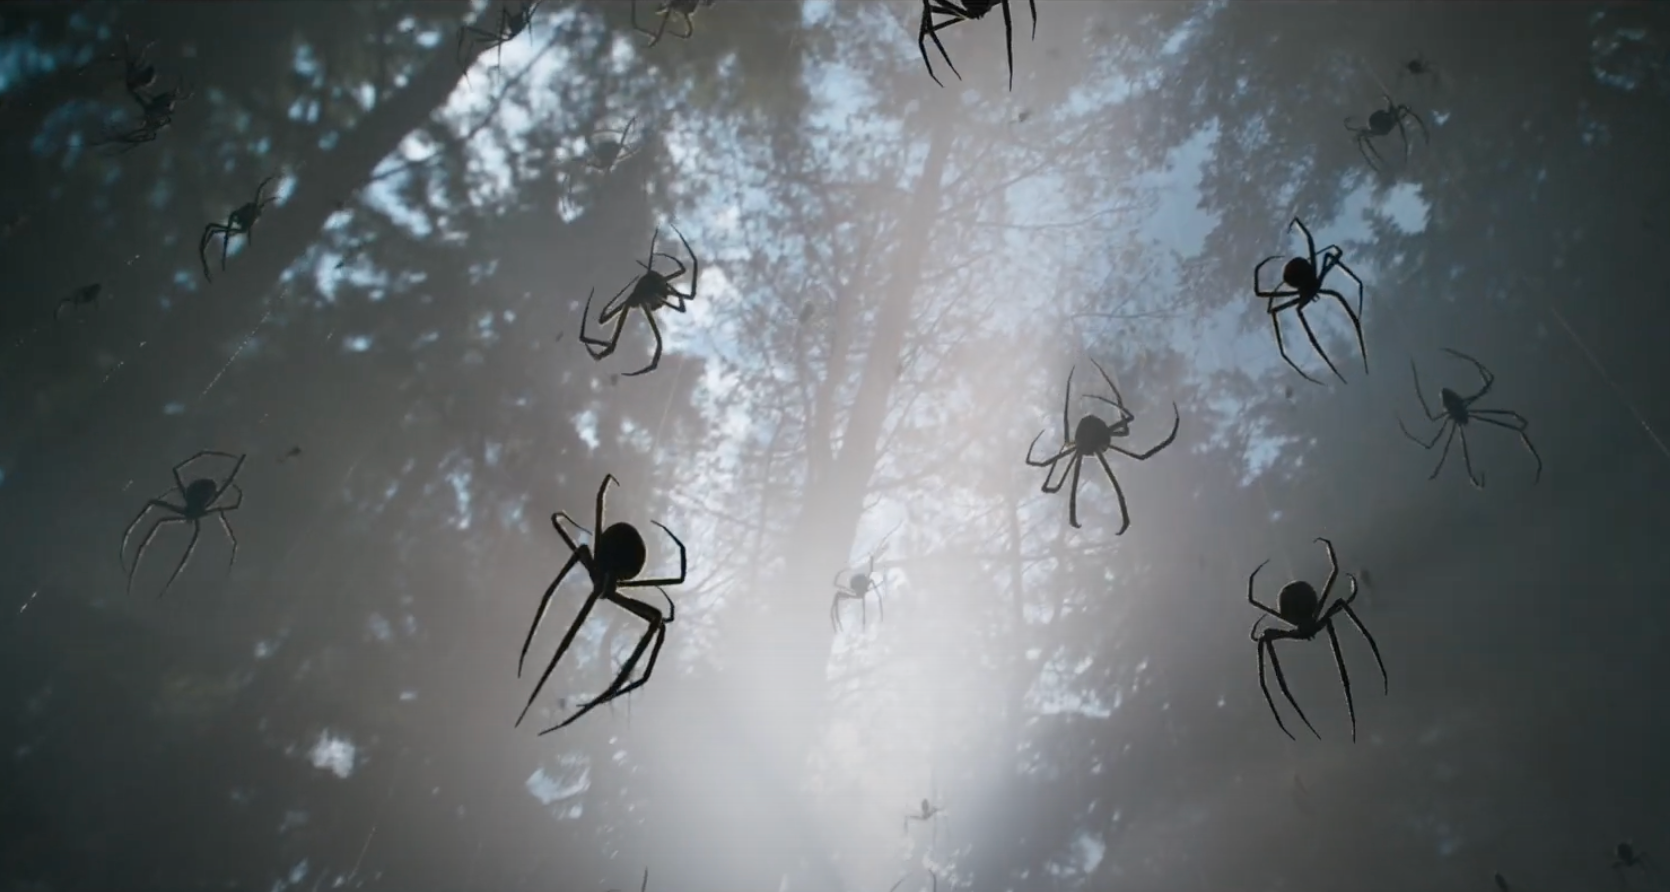 kraven-the-hunter-spider-man-connection